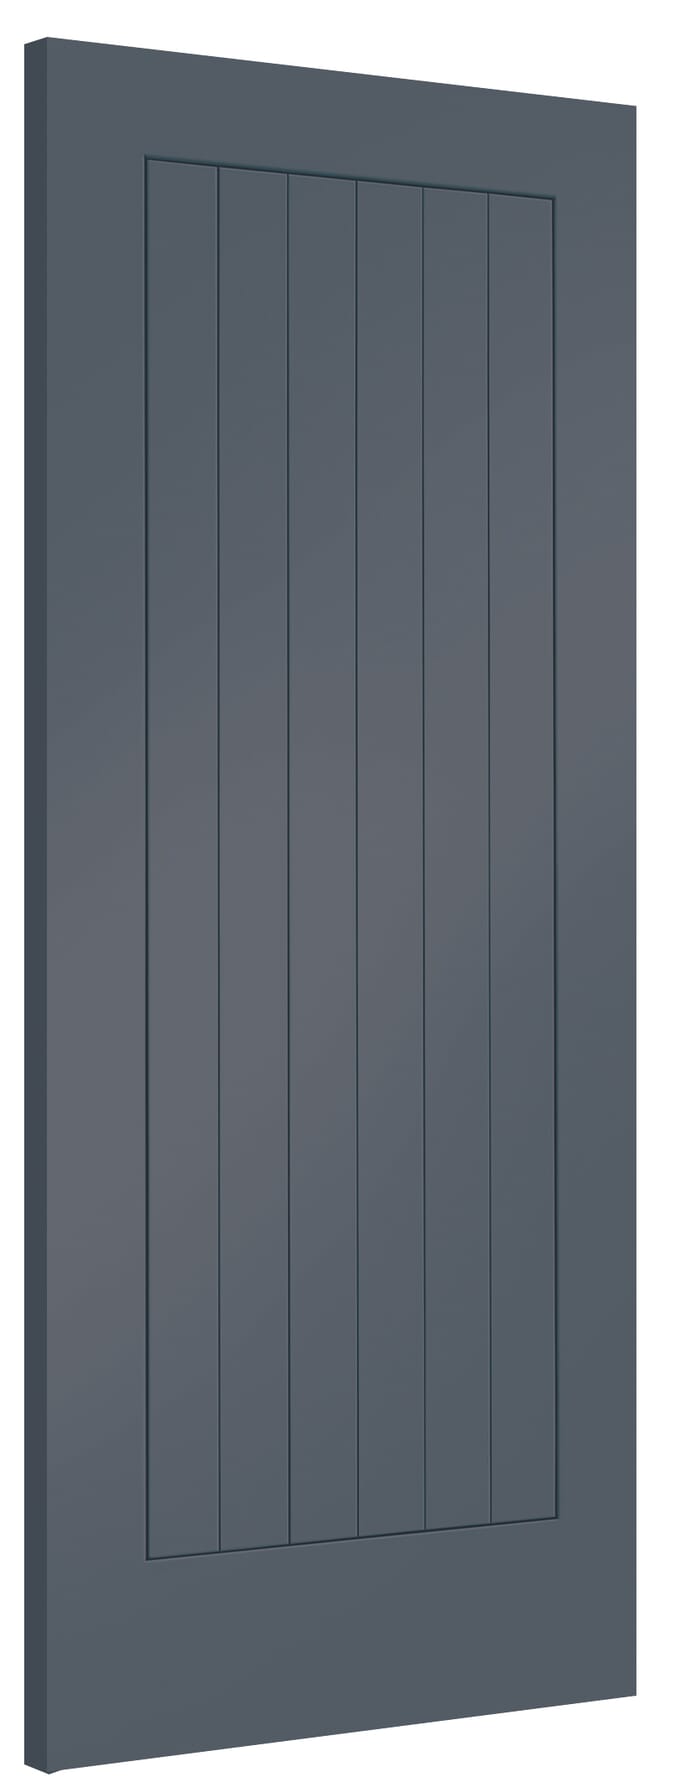 762x1981x44mm (30") Suffolk Cinder Grey Fire Door